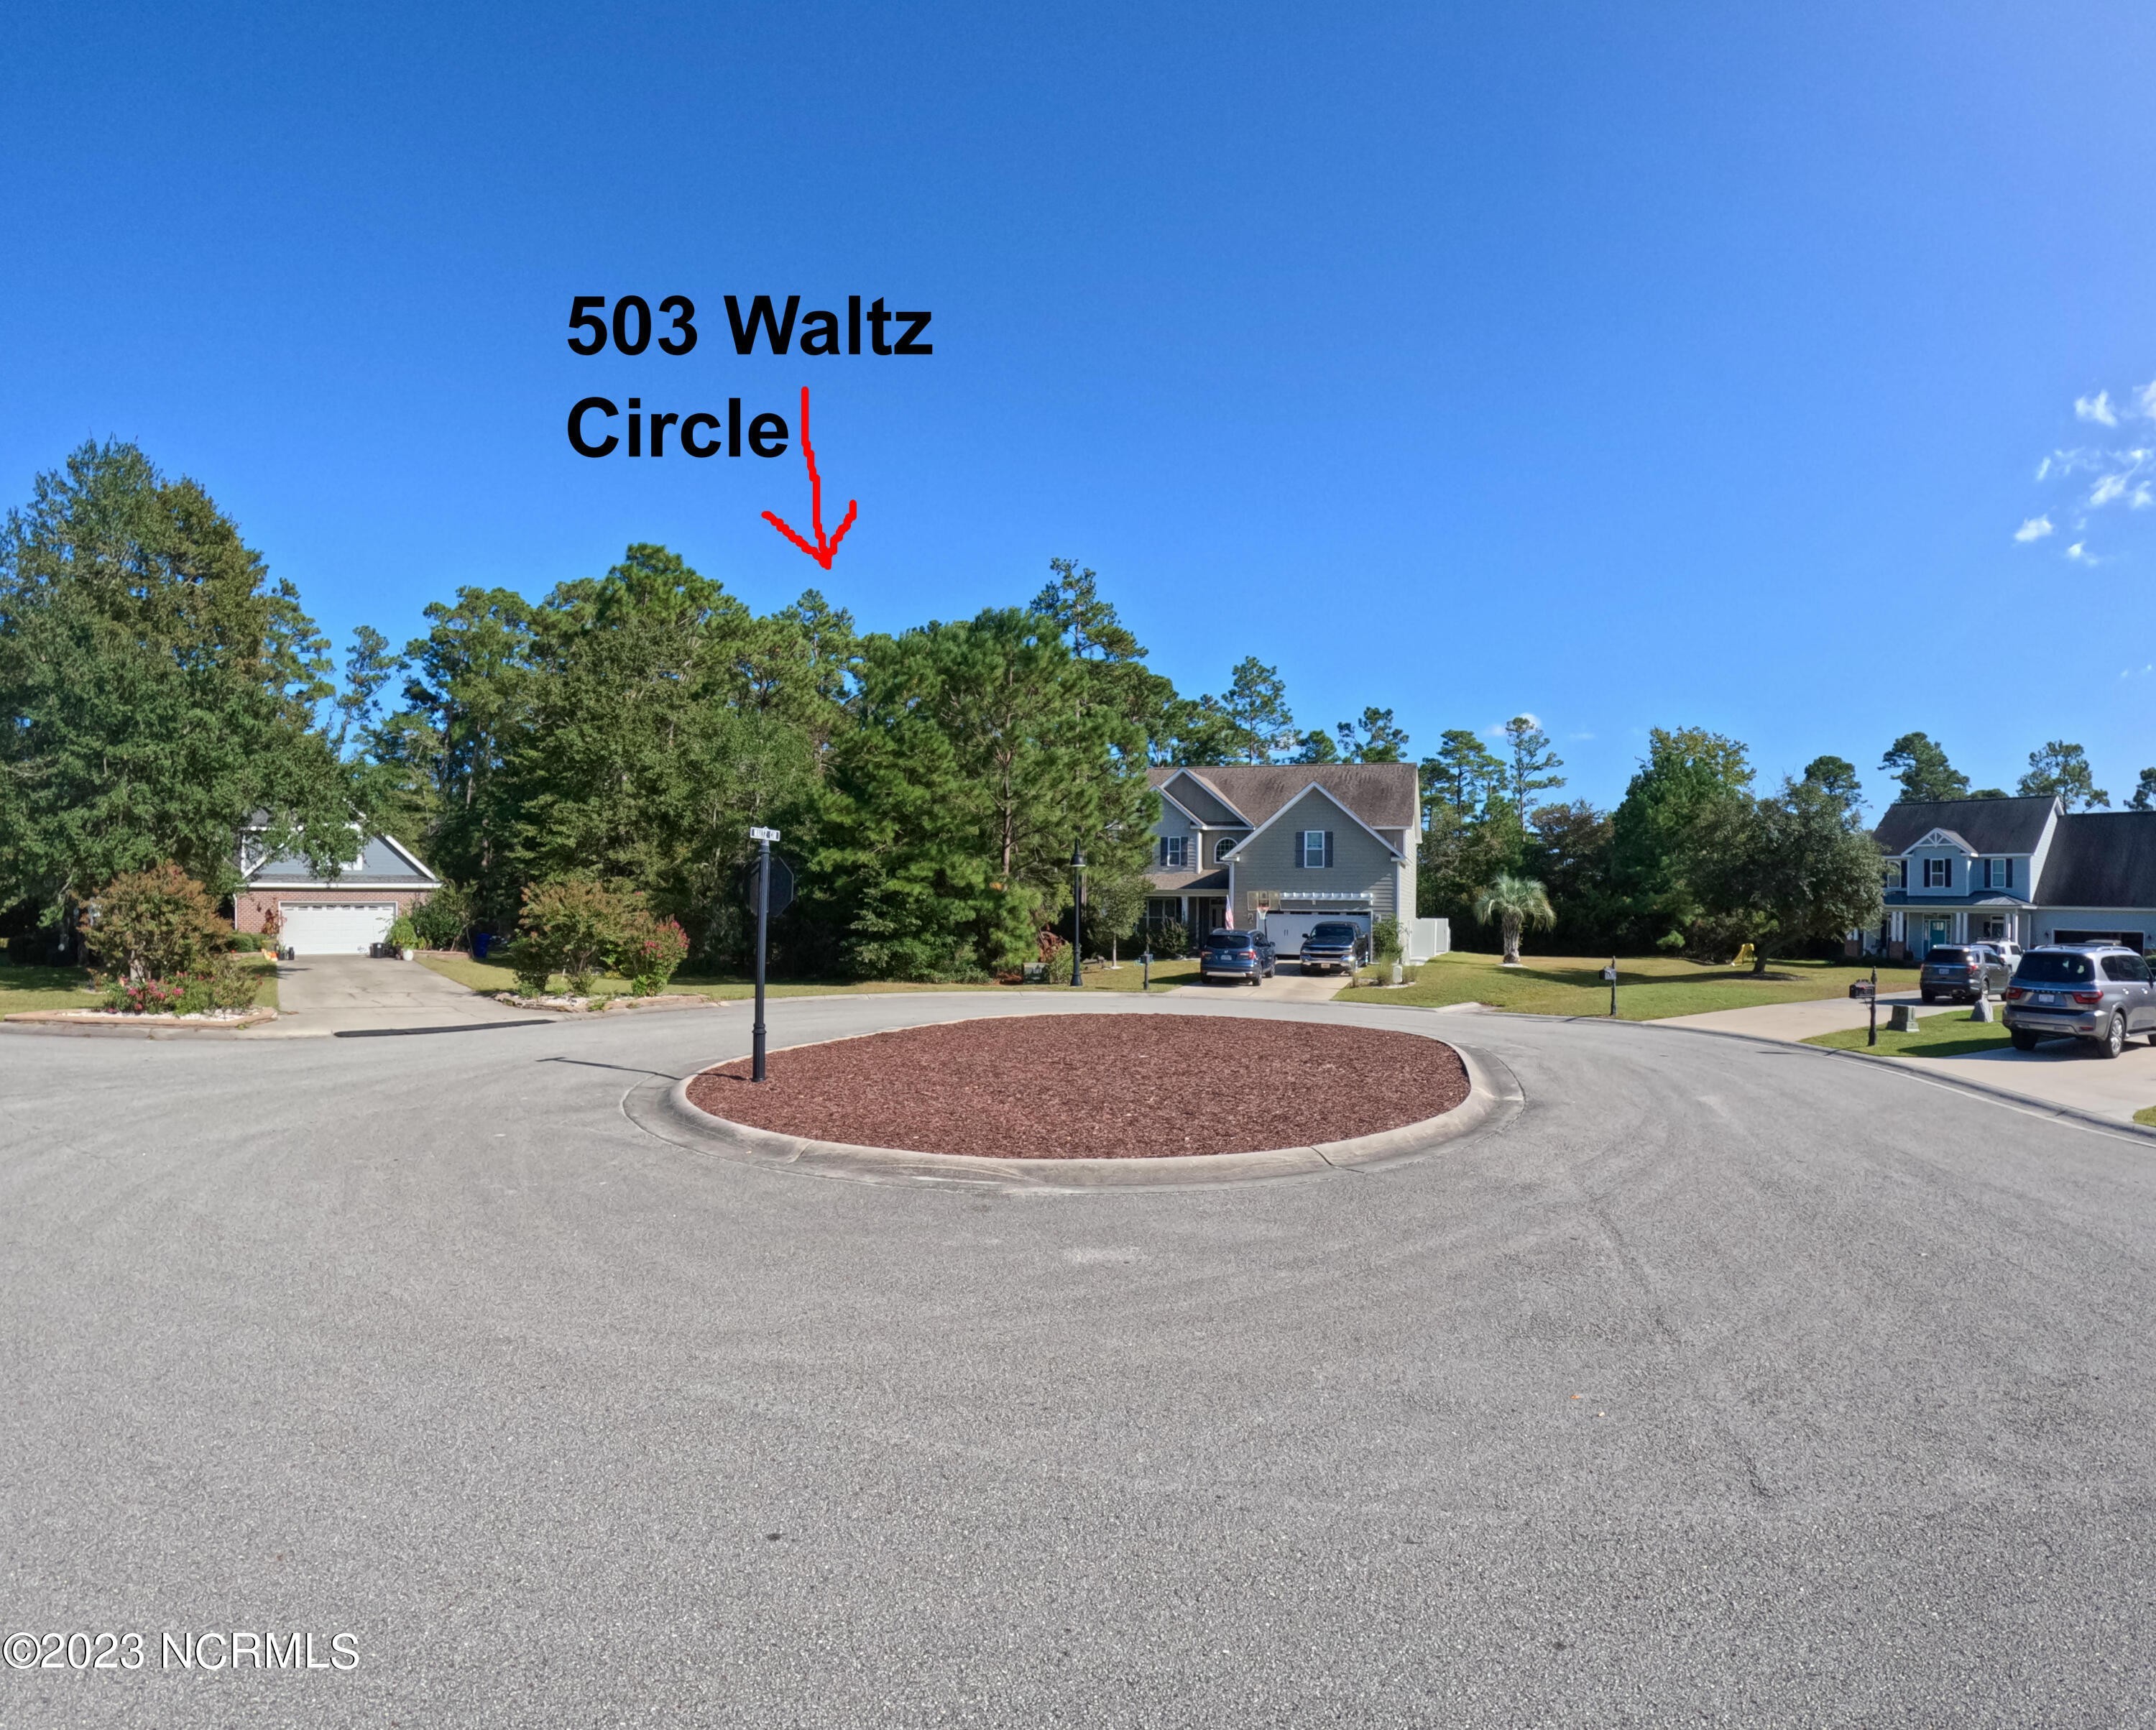 2. 503 Waltz Circle